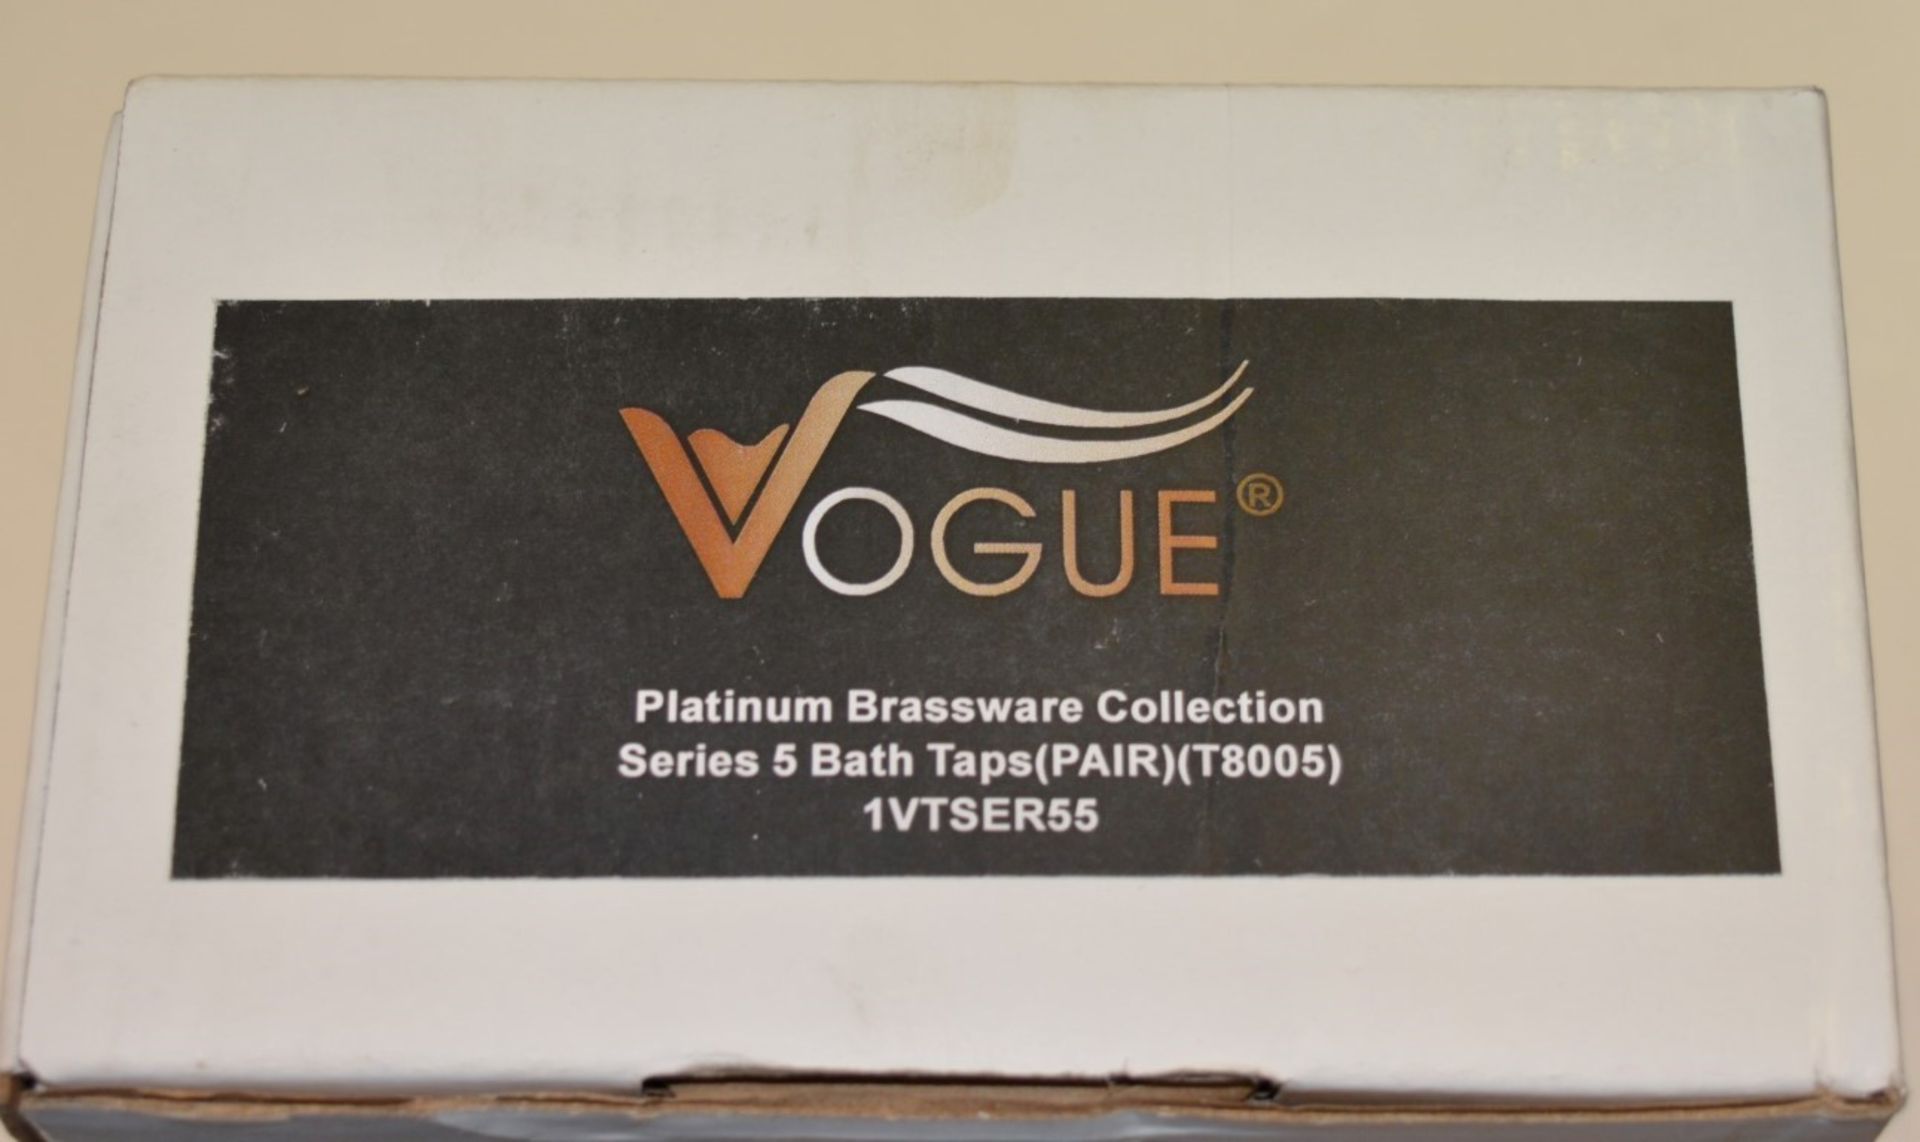 1 x Series 5 BATH TAPS - Vogue Bathrooms Platinum Brassware Collection - Pair of - Contemporary - Image 9 of 9